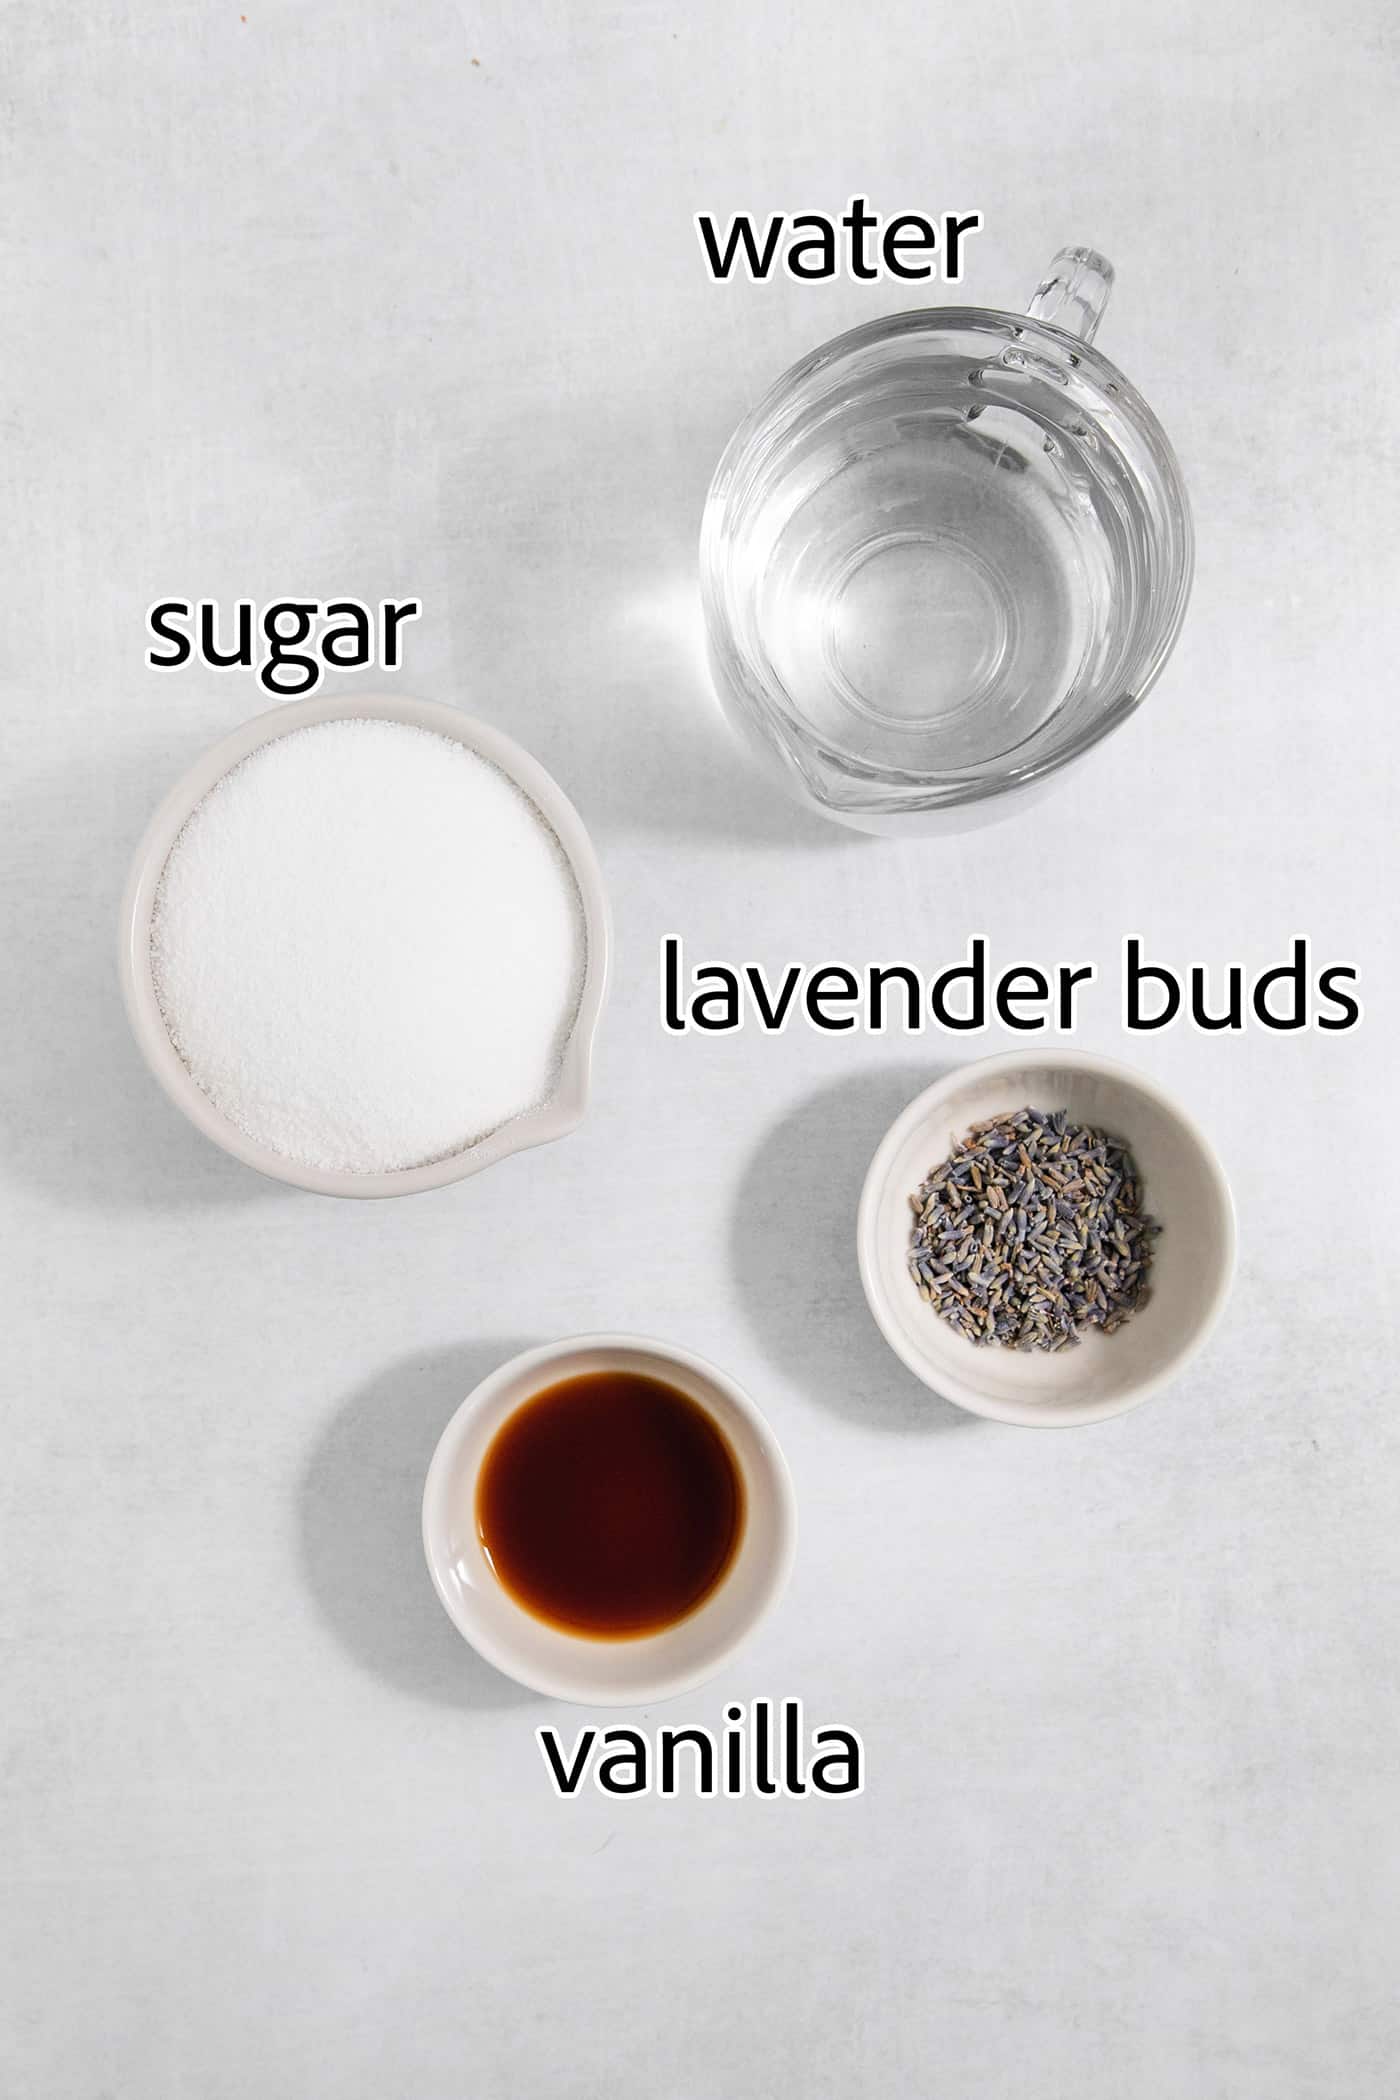 ingredients to make lavender simple syrup: water, sugar, dried lavender buds, vanilla